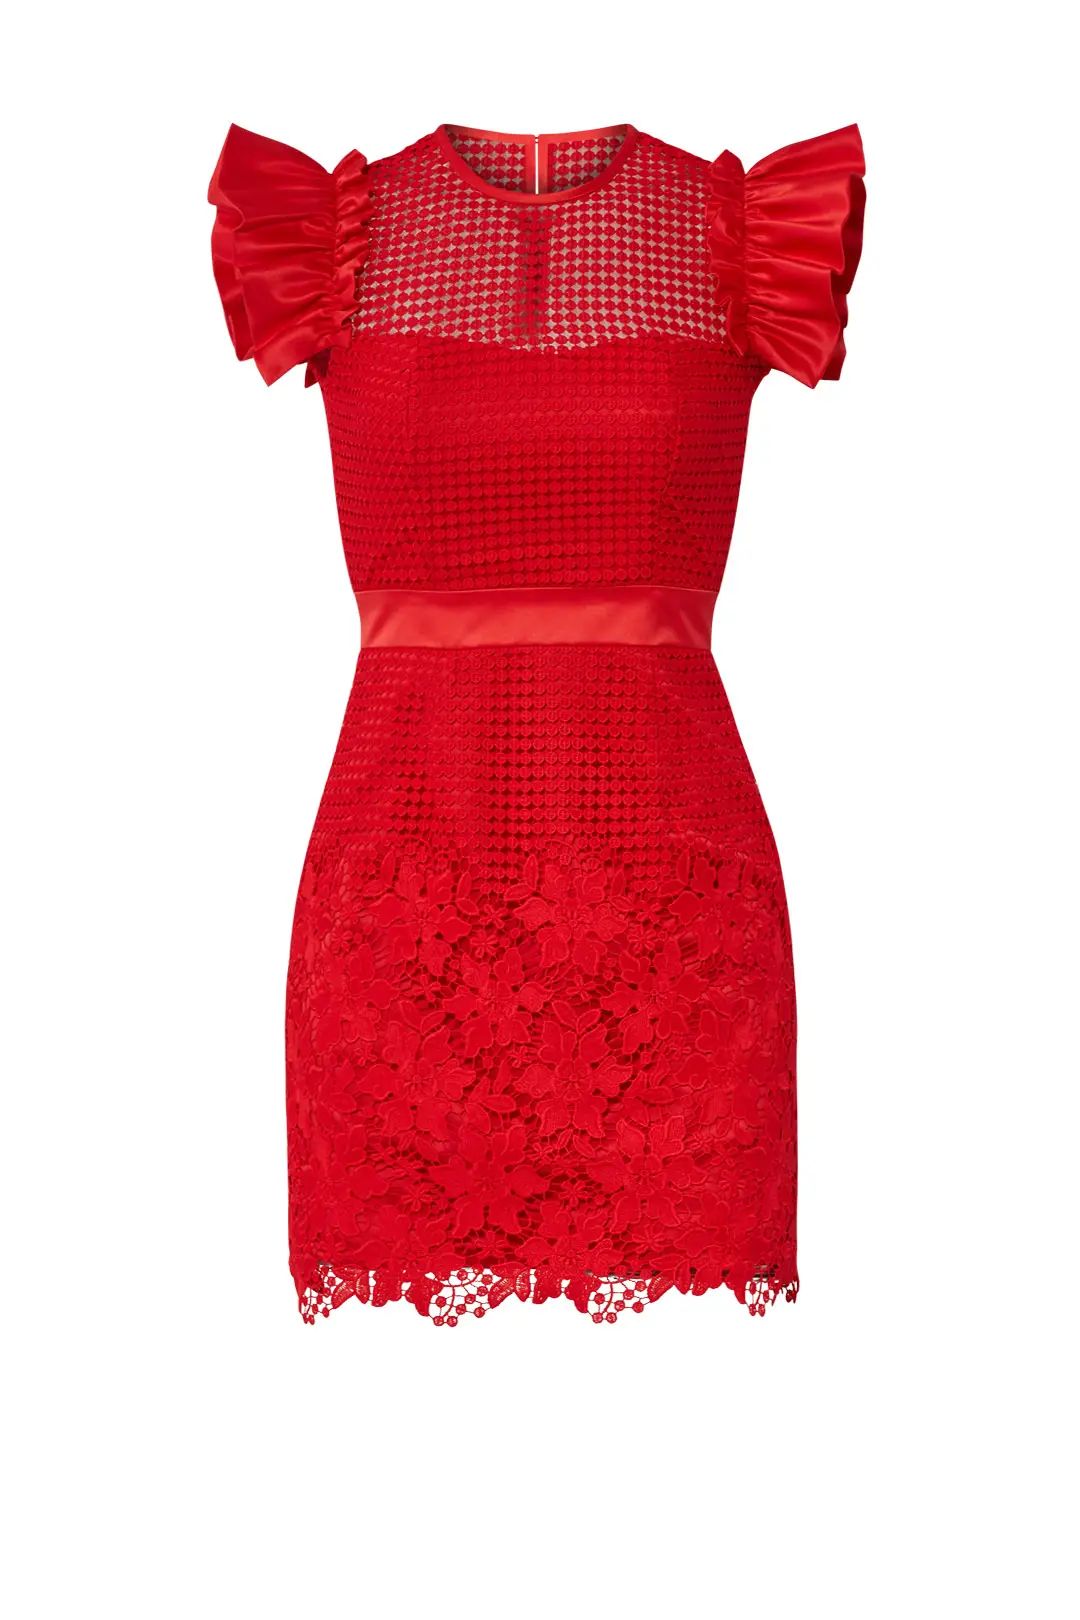 UnitedWood Red Karlie Dress | Rent The Runway